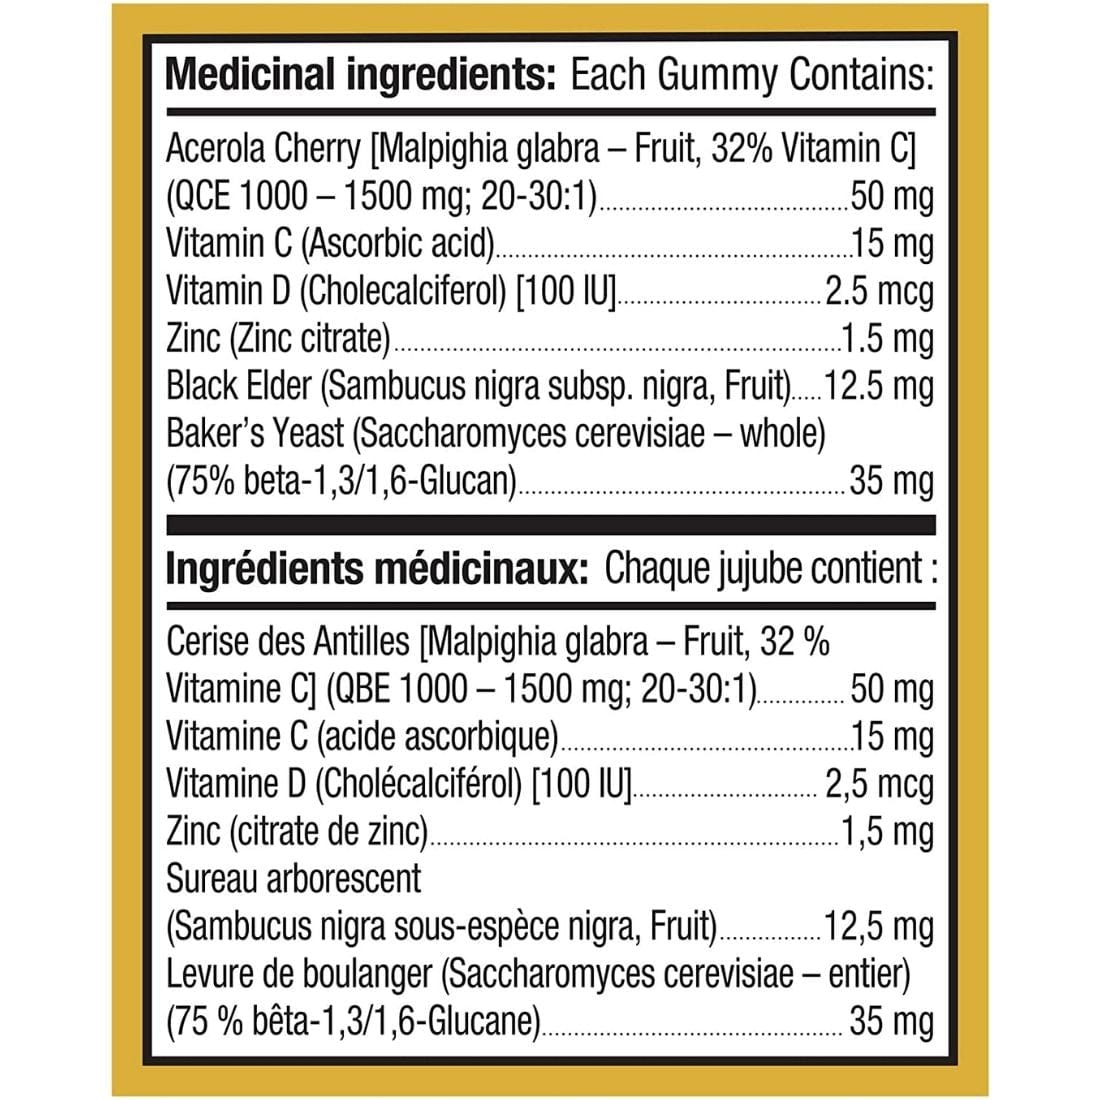 Olly Gummy Vitamins Kids Immunity Plus Elderberry, 50 Gummies